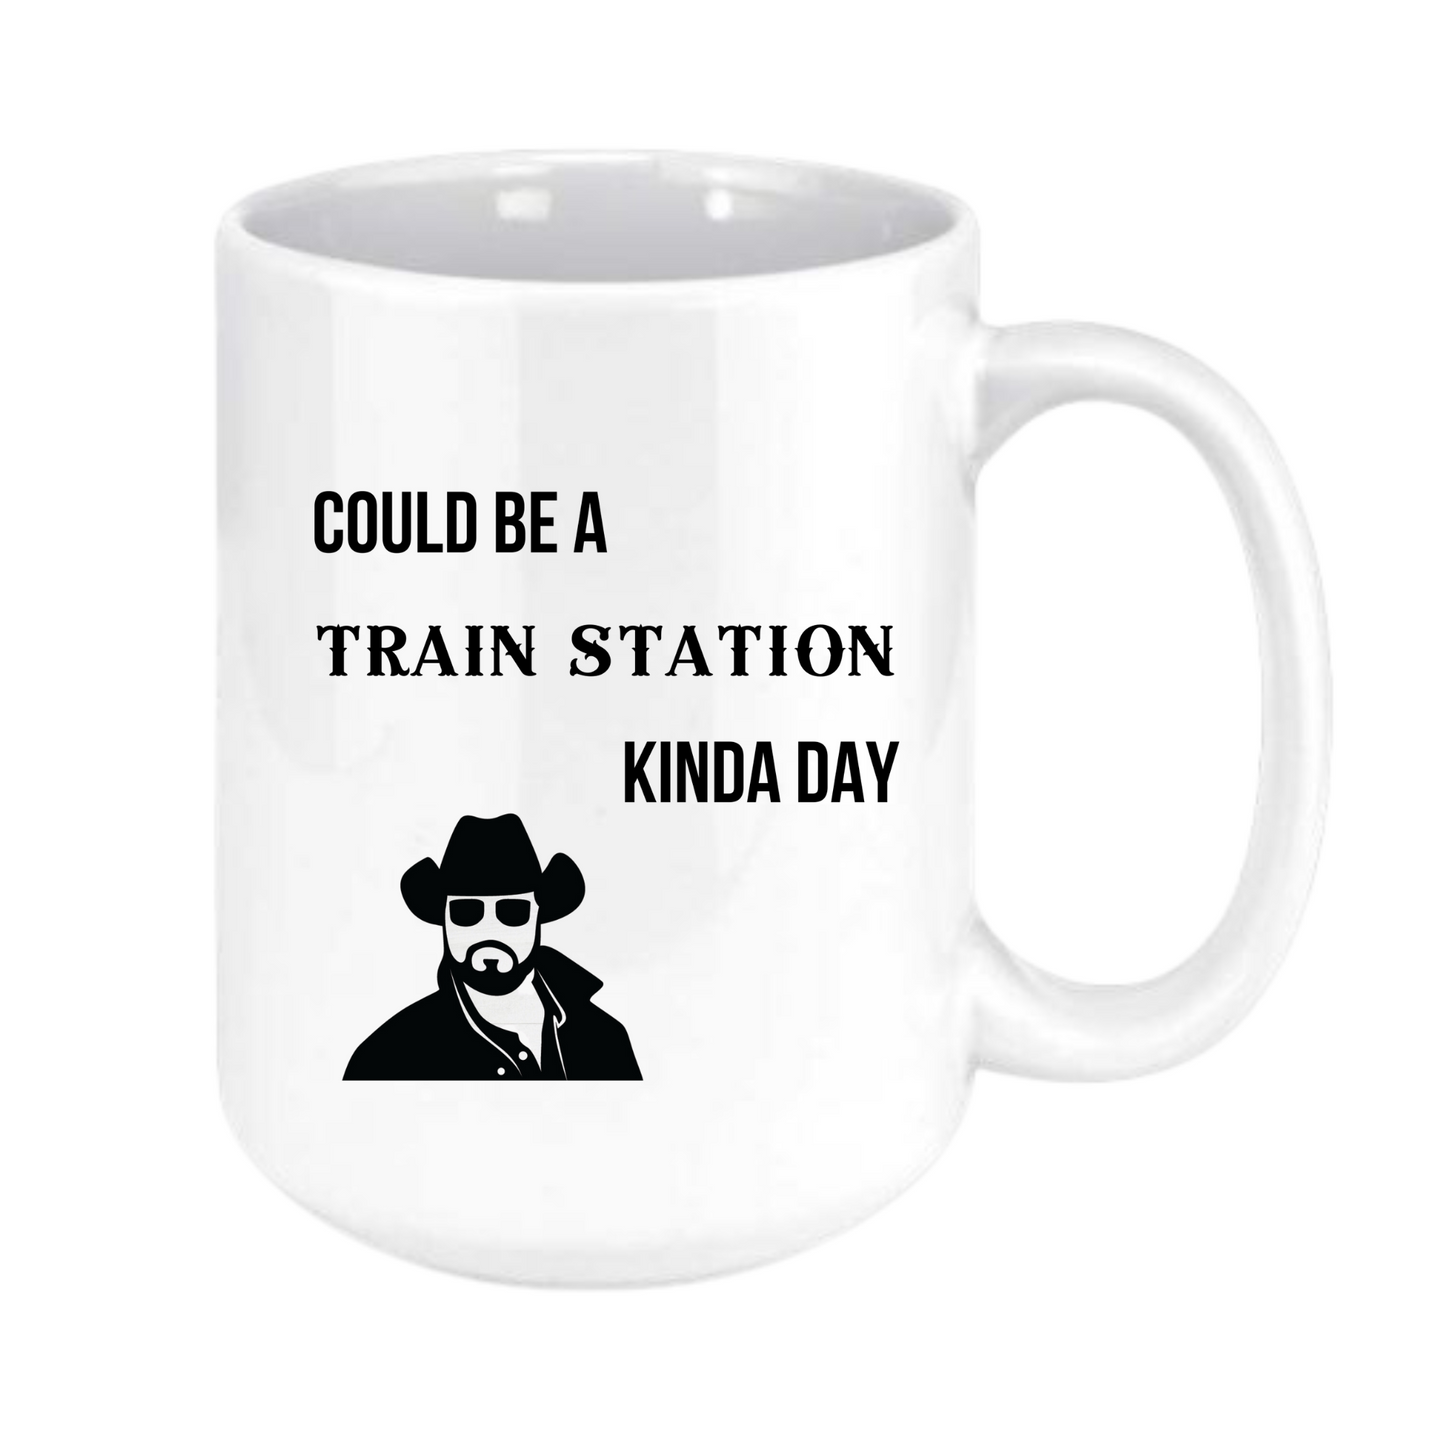 Could be a train station kinda day mug